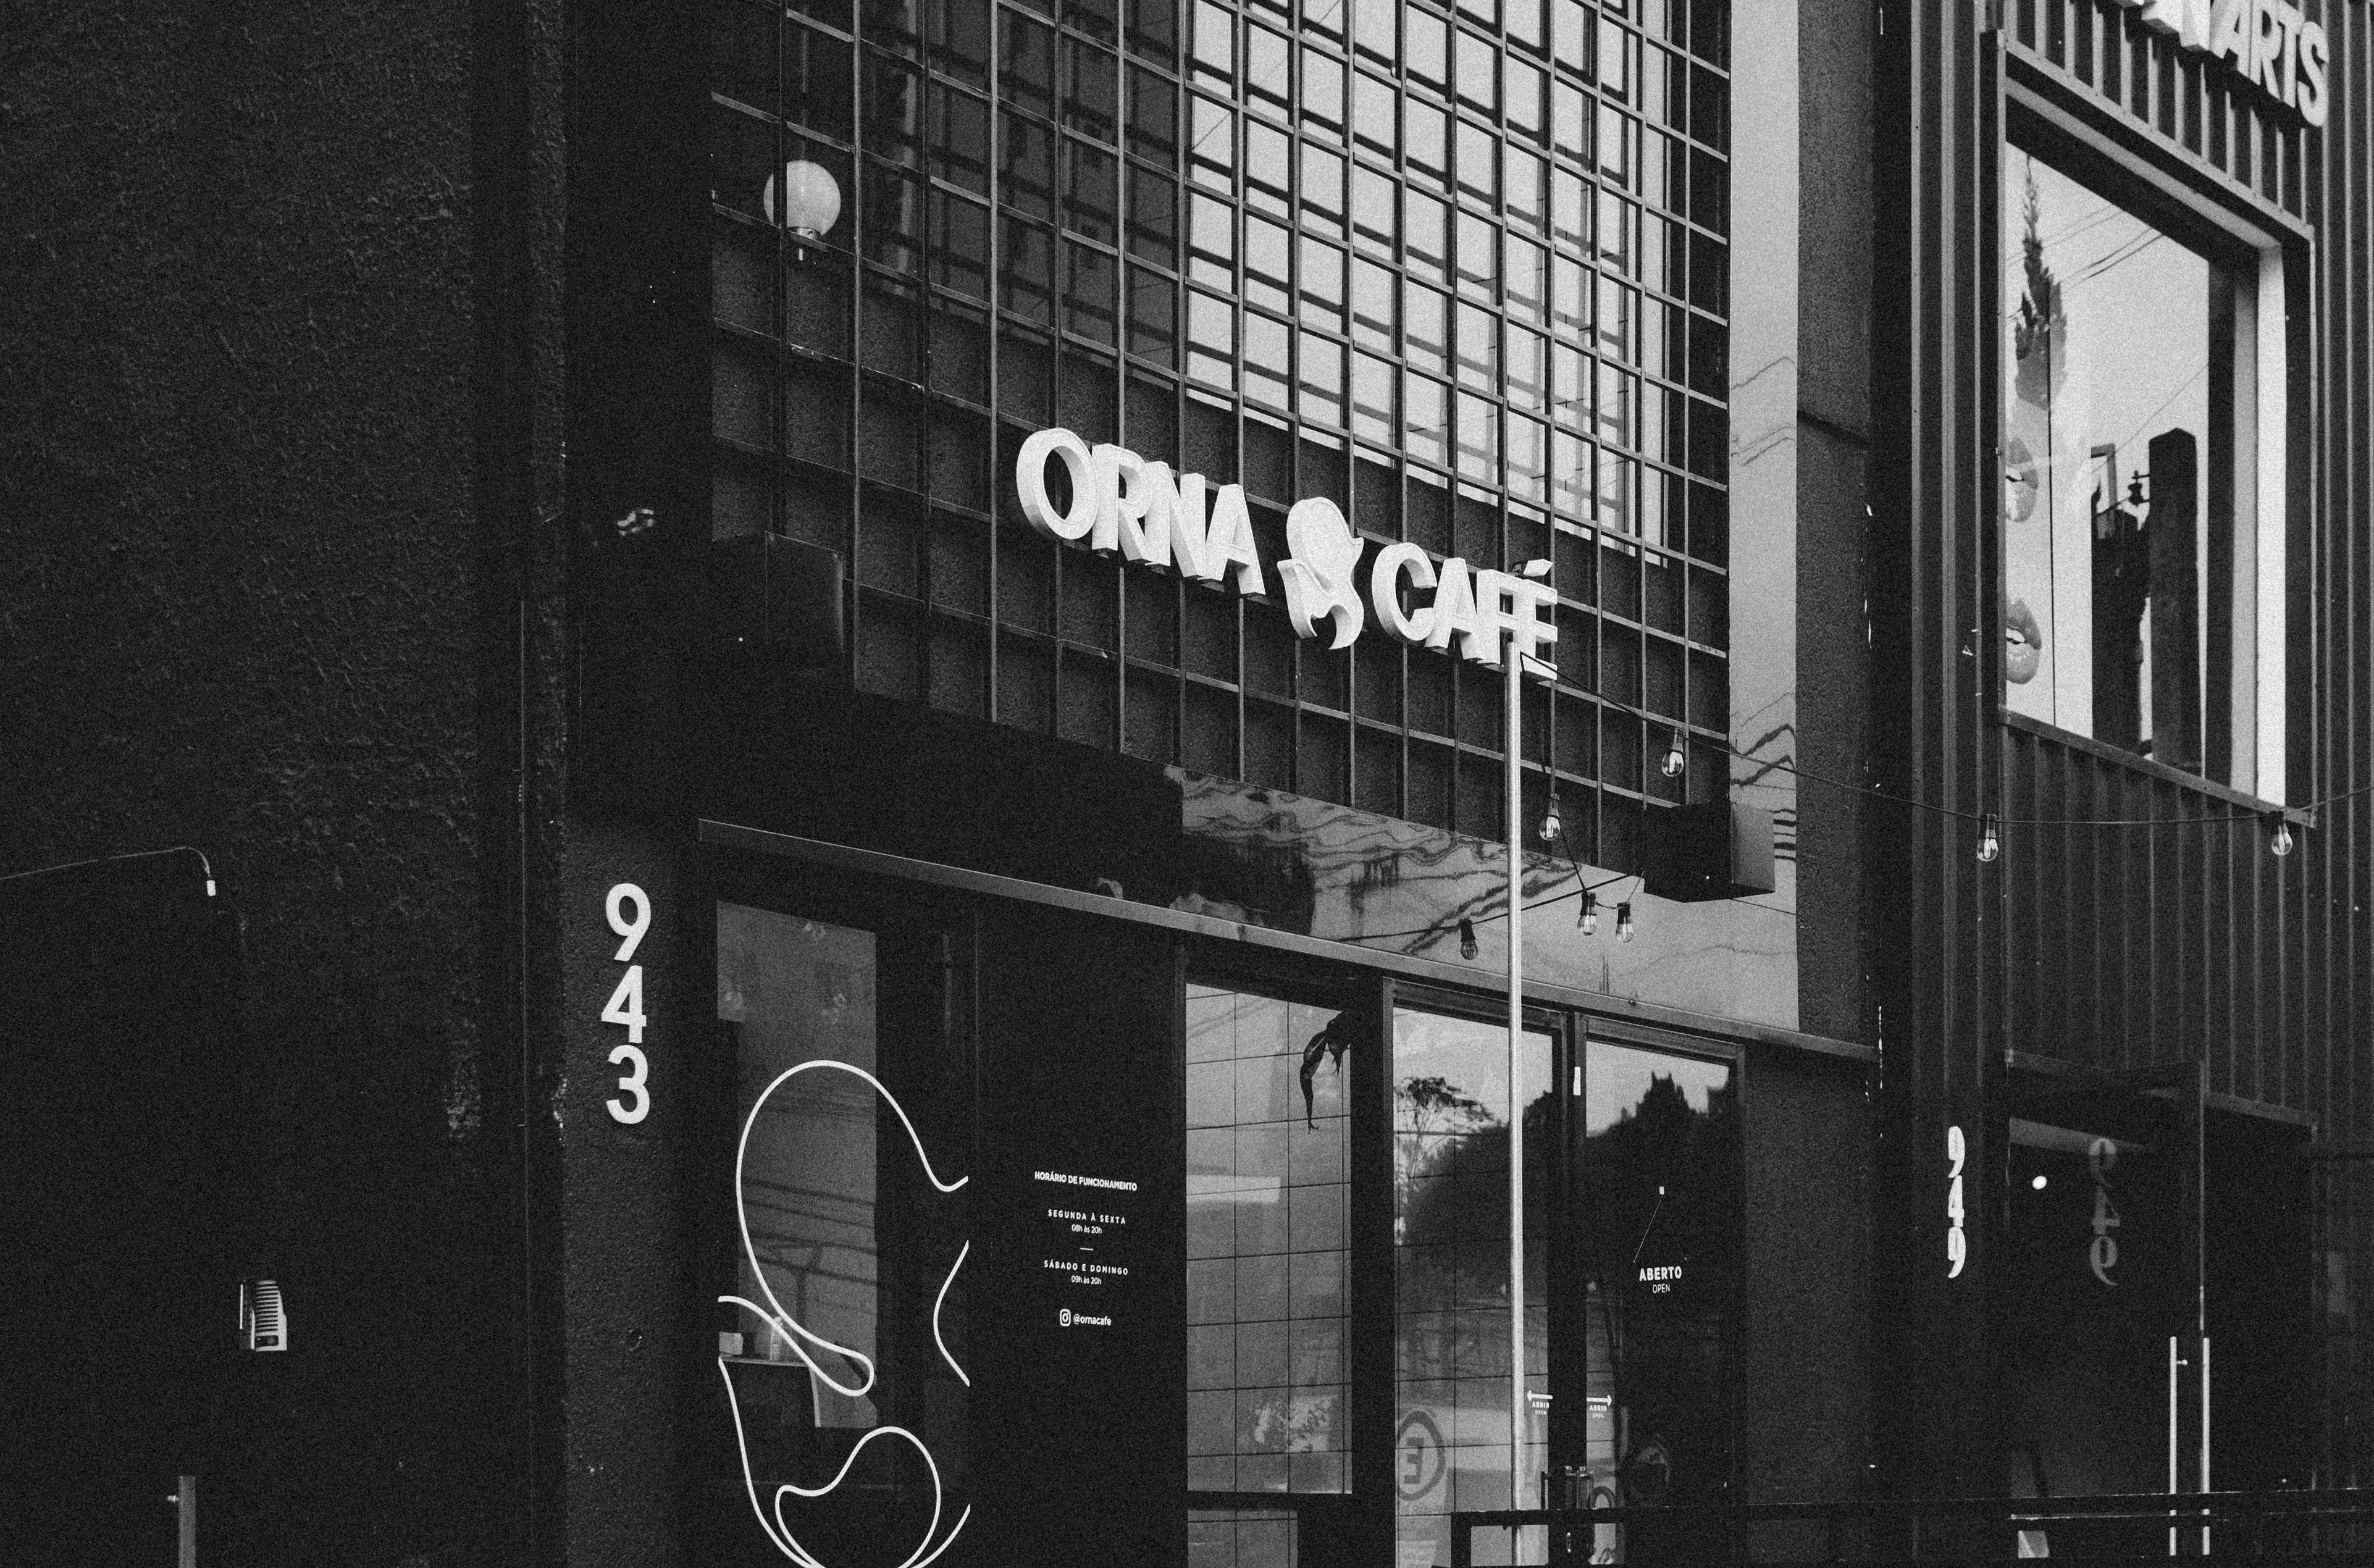 Orna & Cafe store